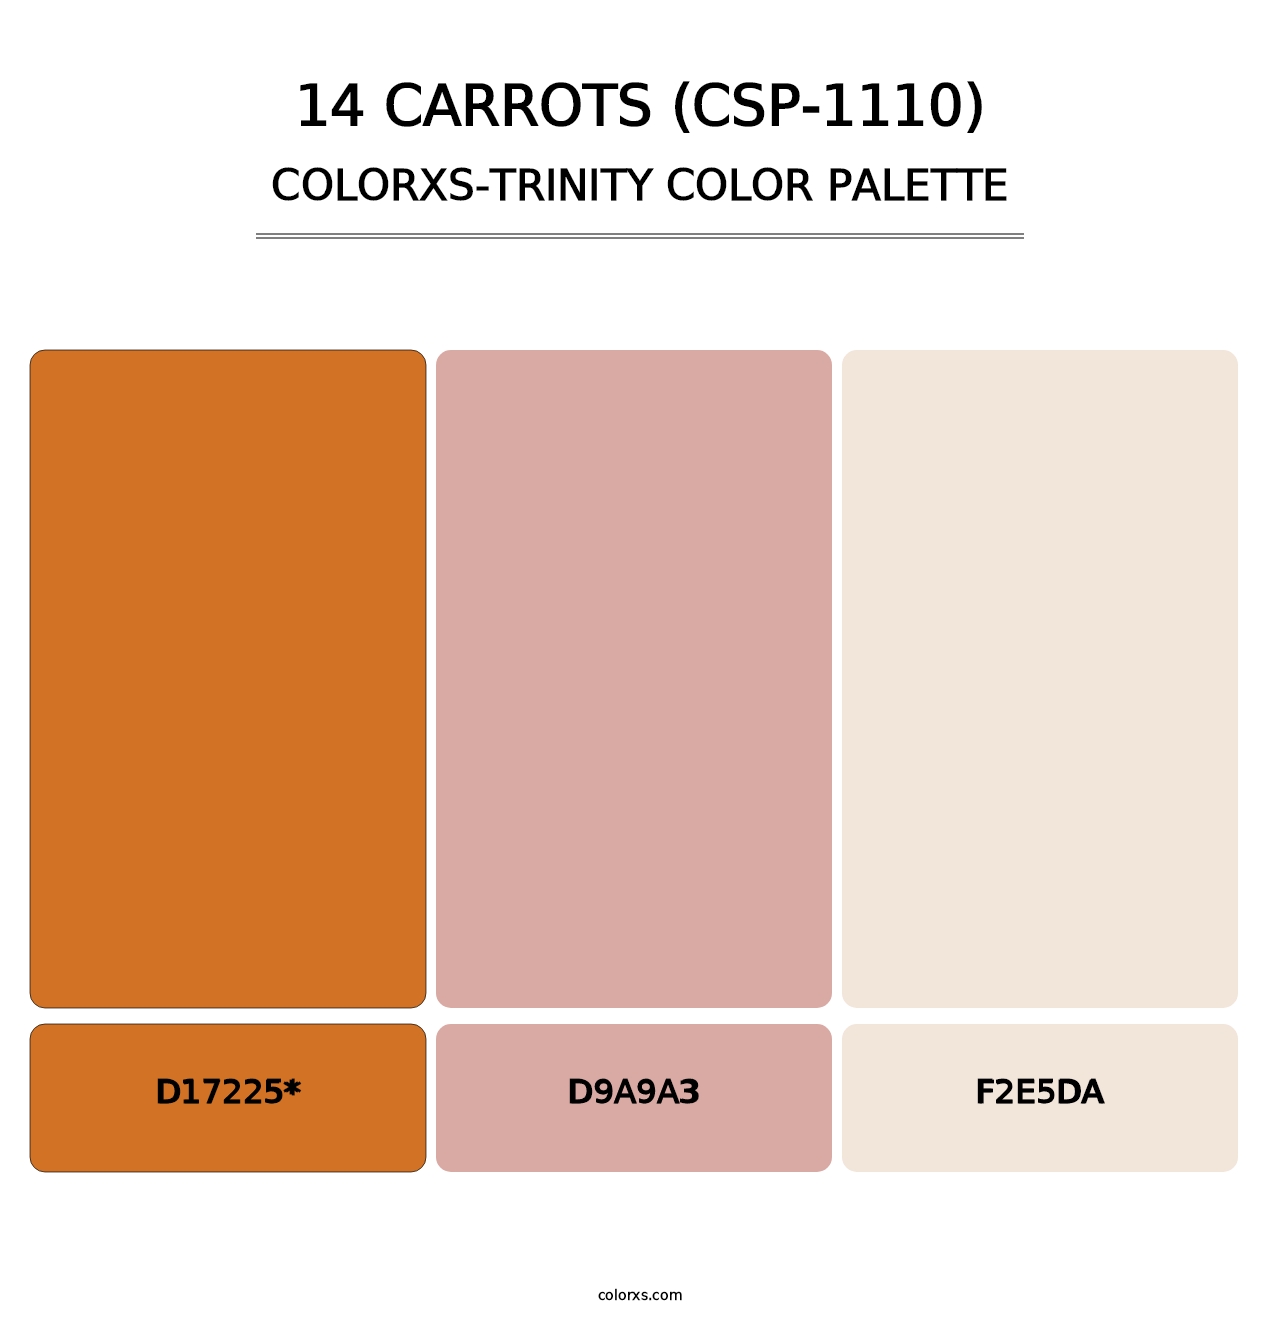 14 Carrots (CSP-1110) - Colorxs Trinity Palette